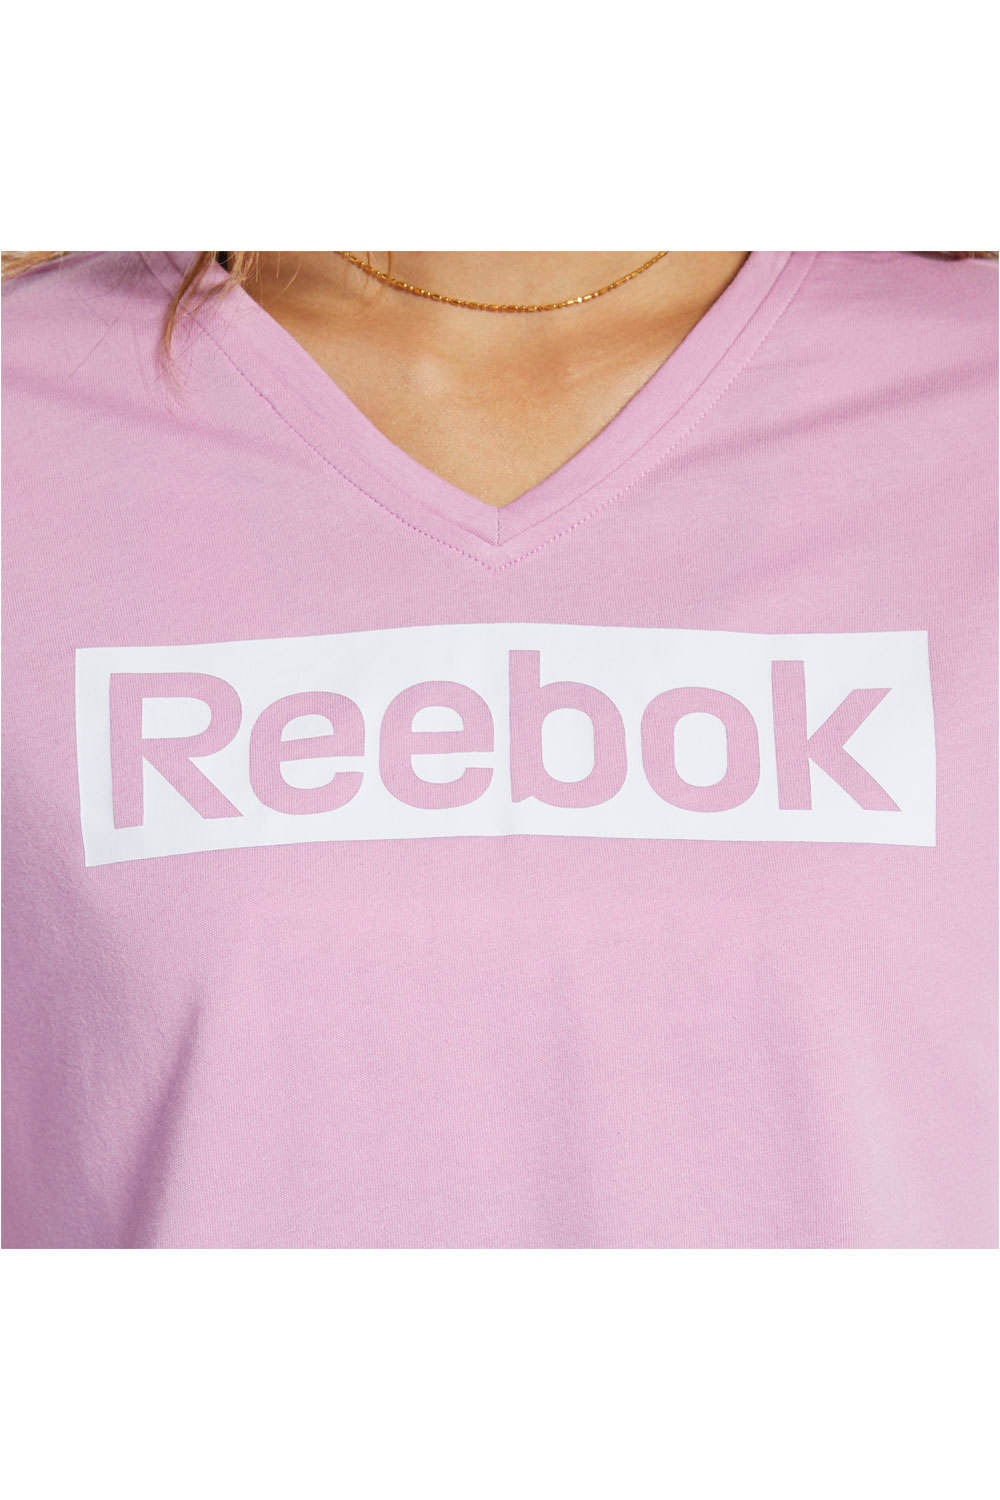 Reebok camiseta manga corta mujer TE Linear Logo GraphicTee vista detalle